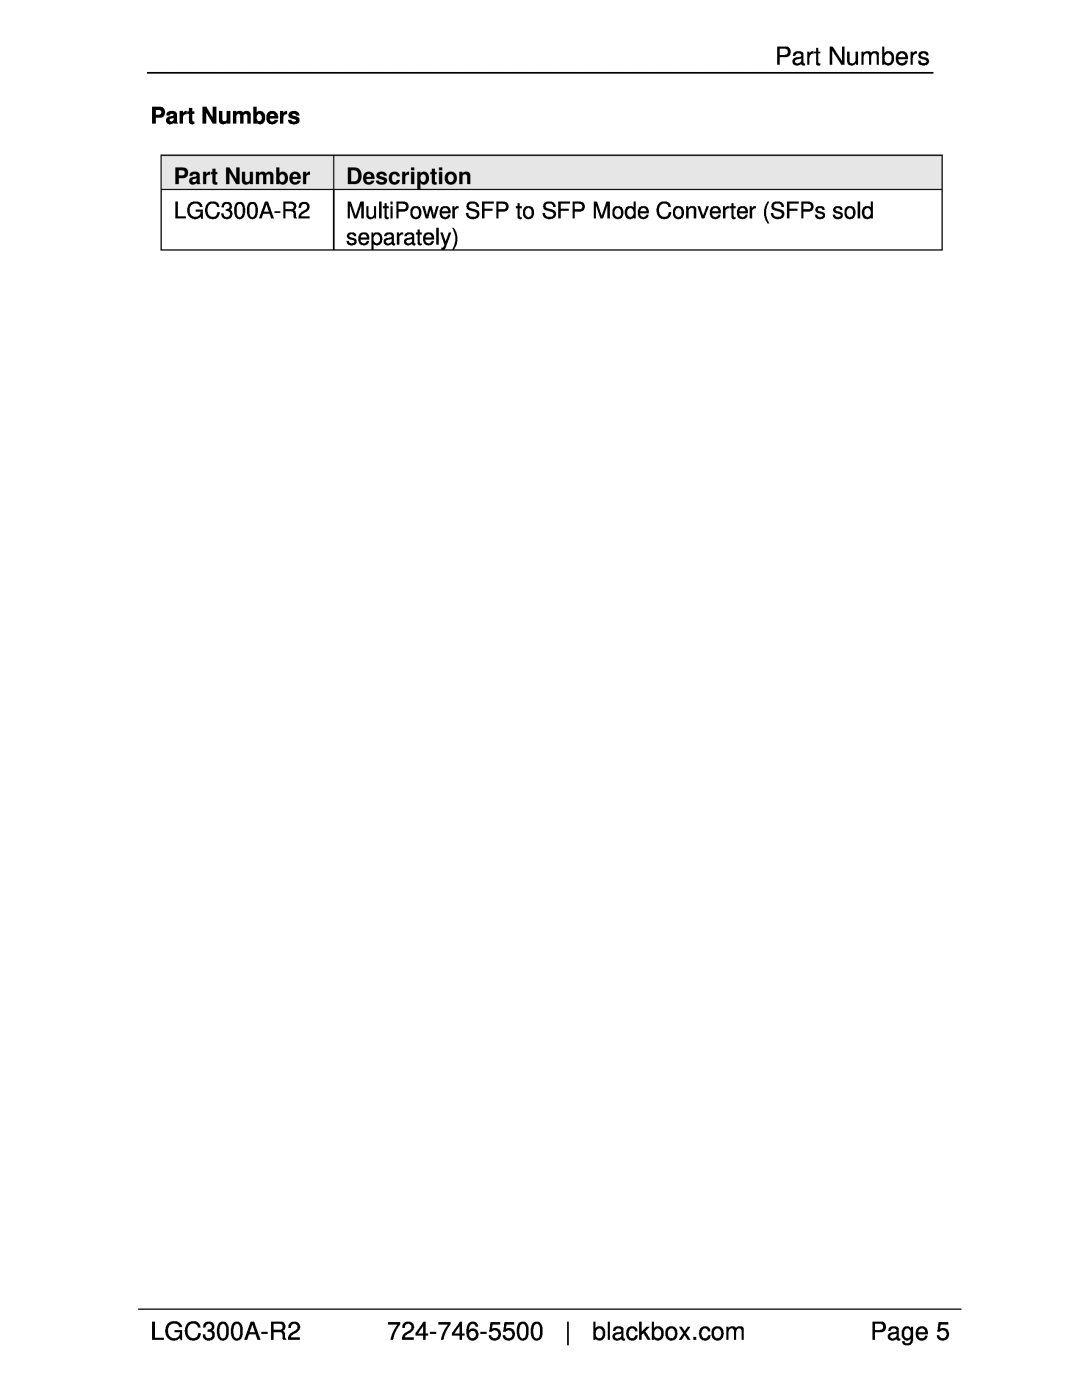 Black Box Industrial SFP/SFP Multi-Power Mode Converter manual Part Numbers, Description, LGC300A-R2, separately, Page 